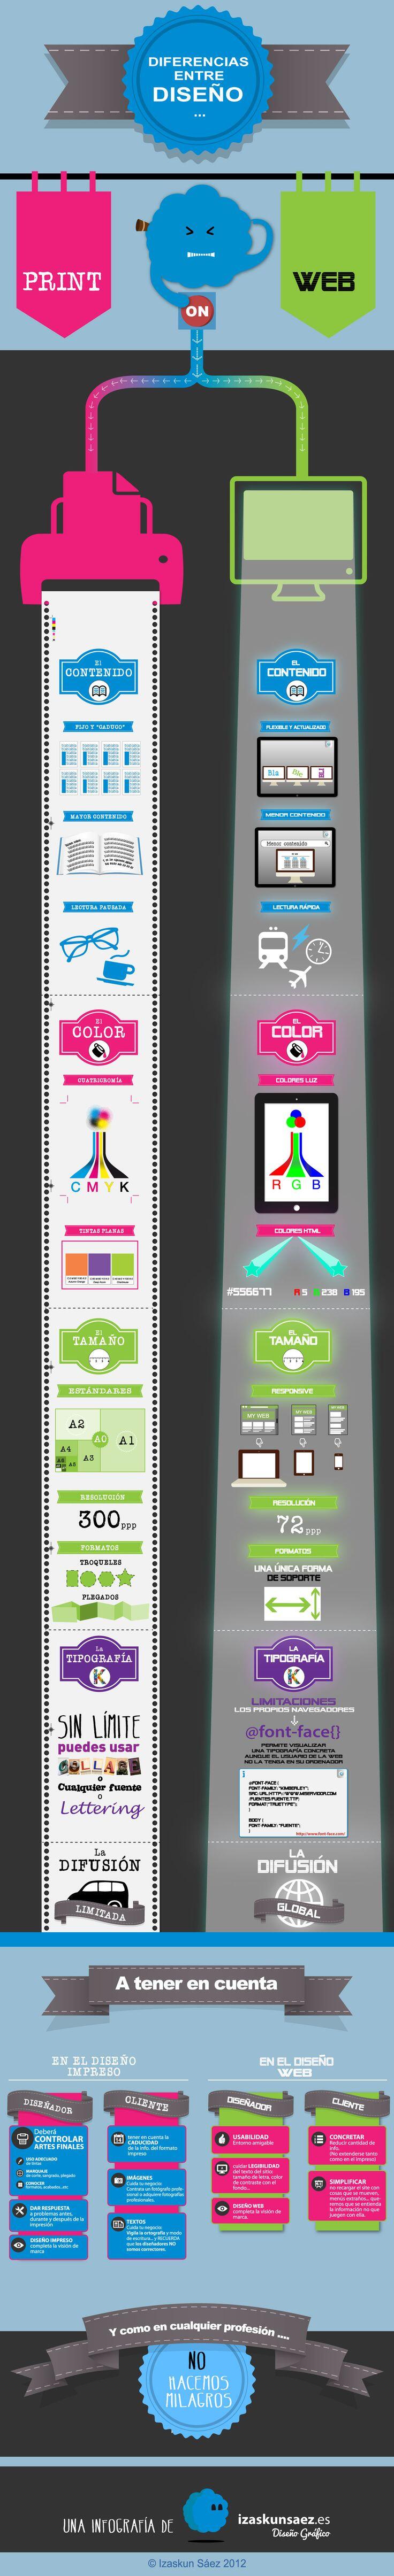 infografía diseño web vs print